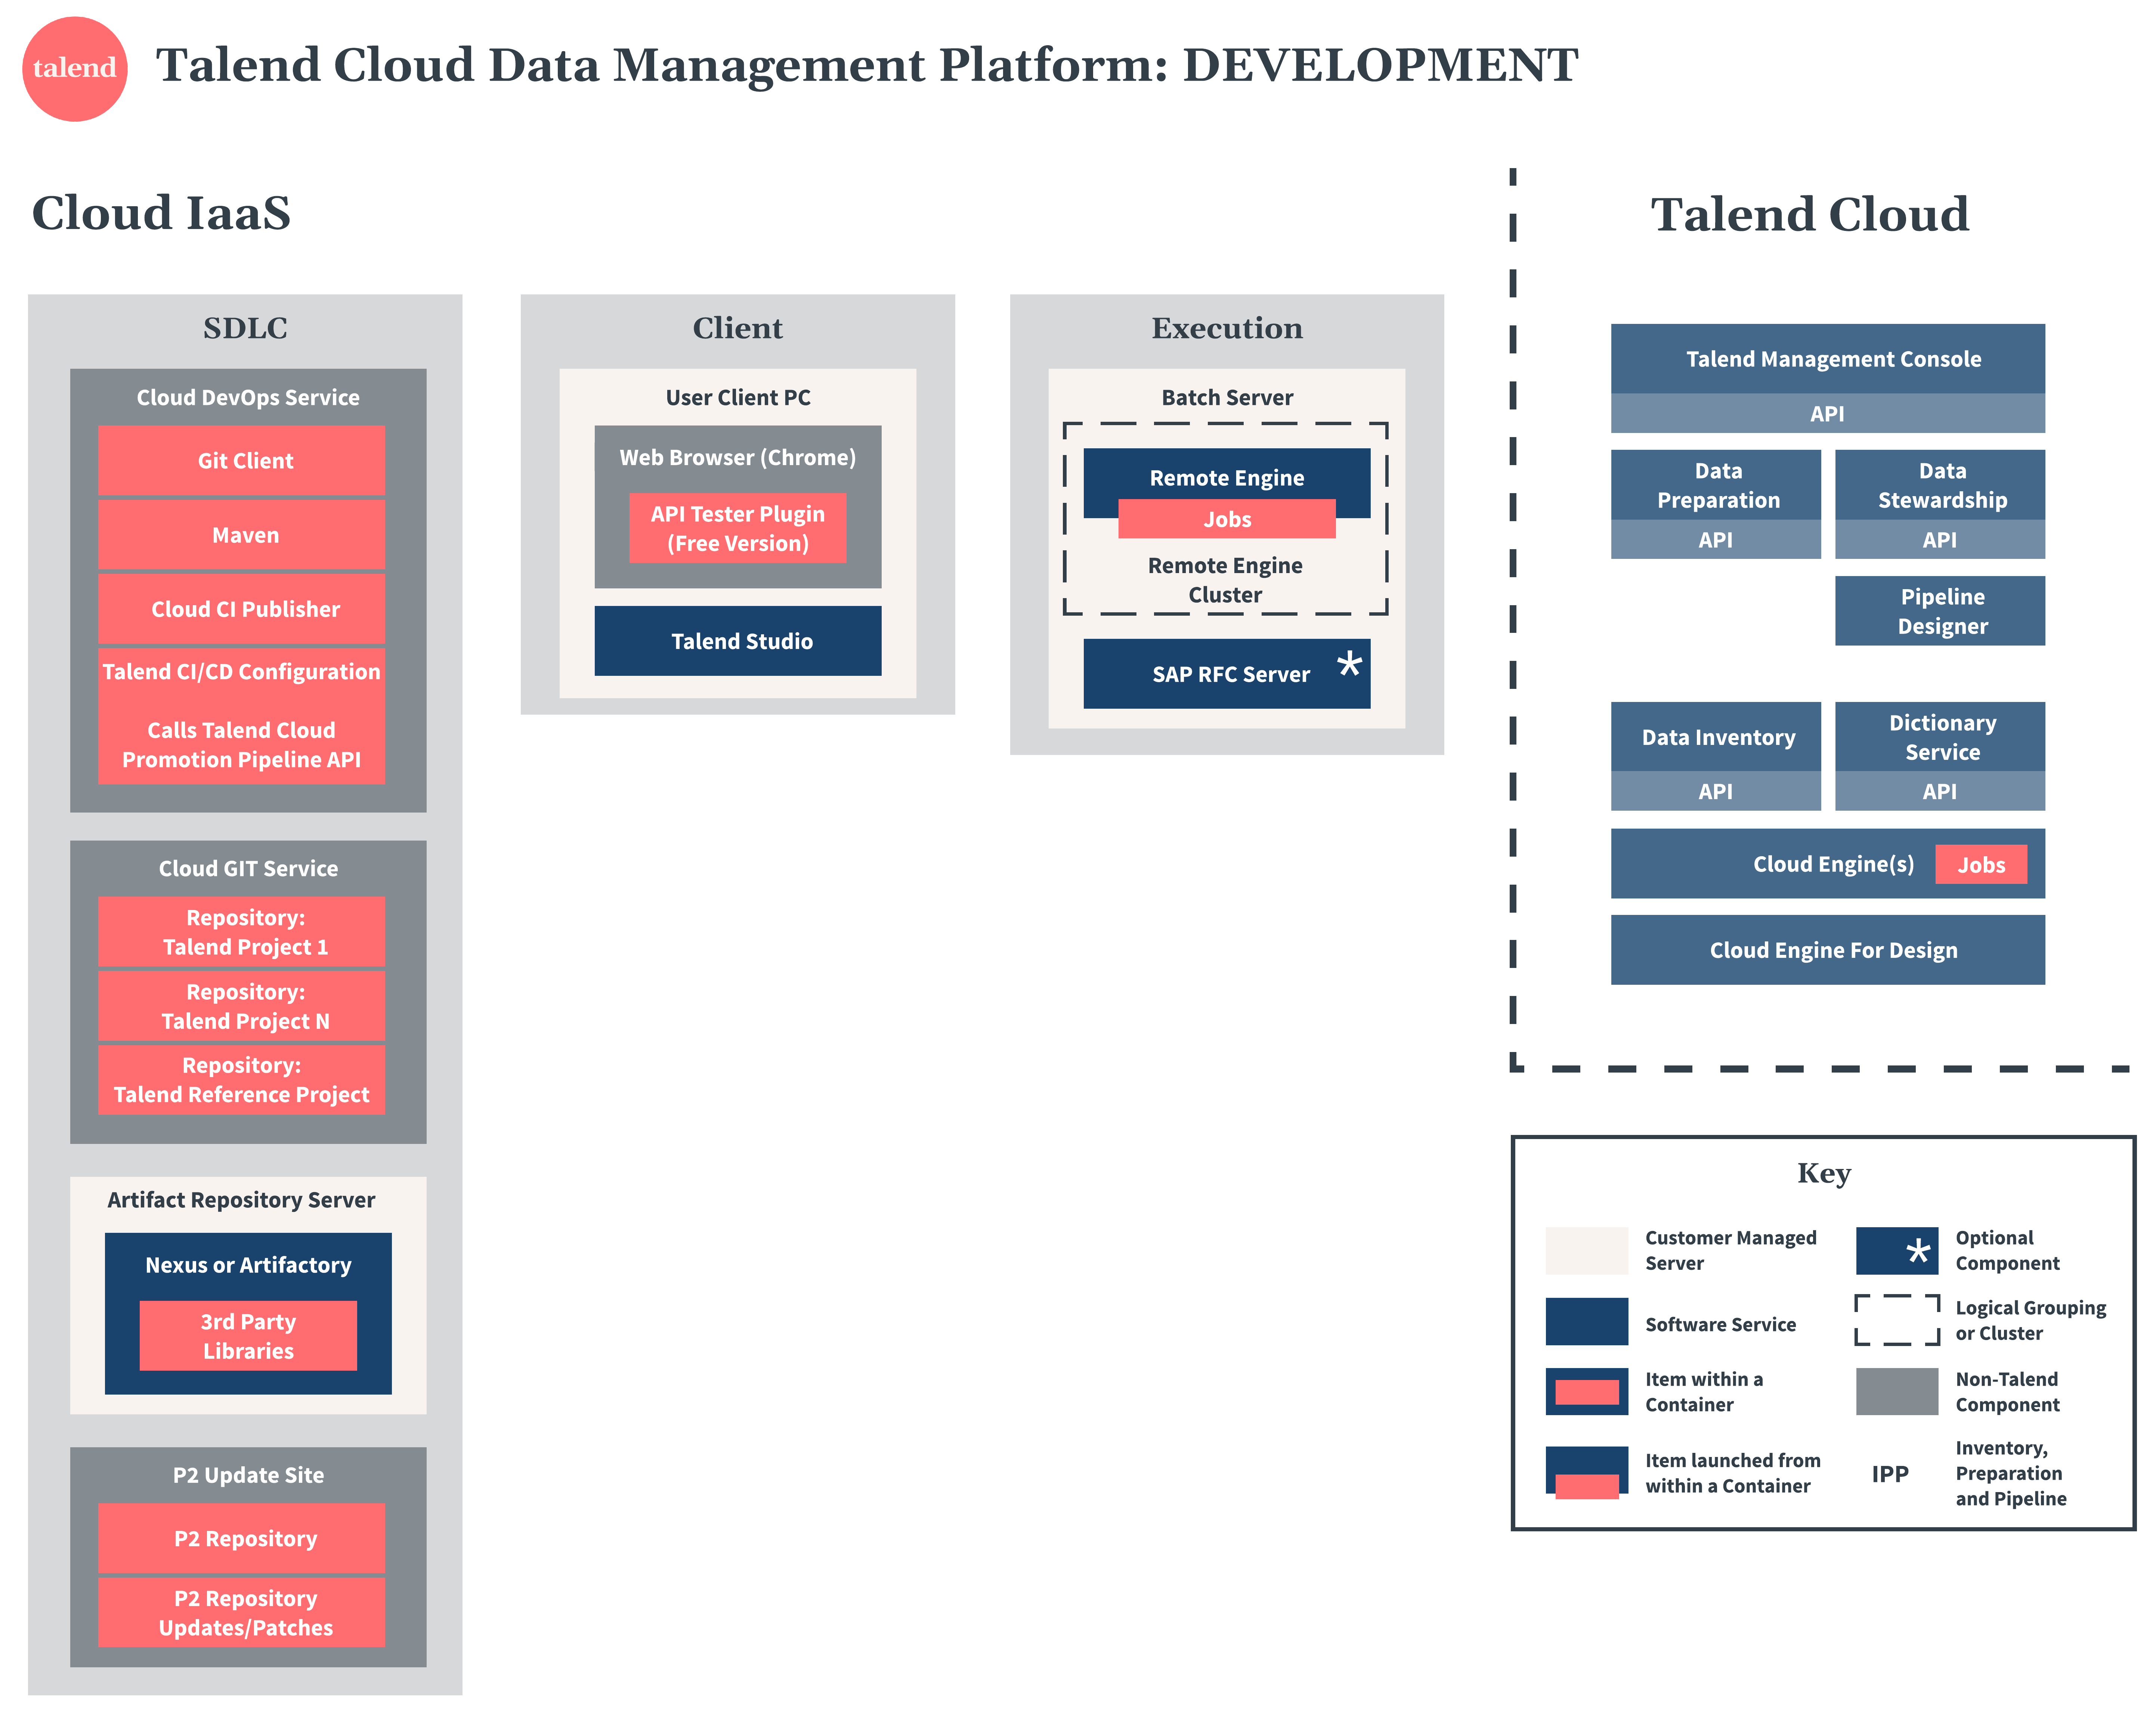 Talend Cloud Data Management Platform development diagram.